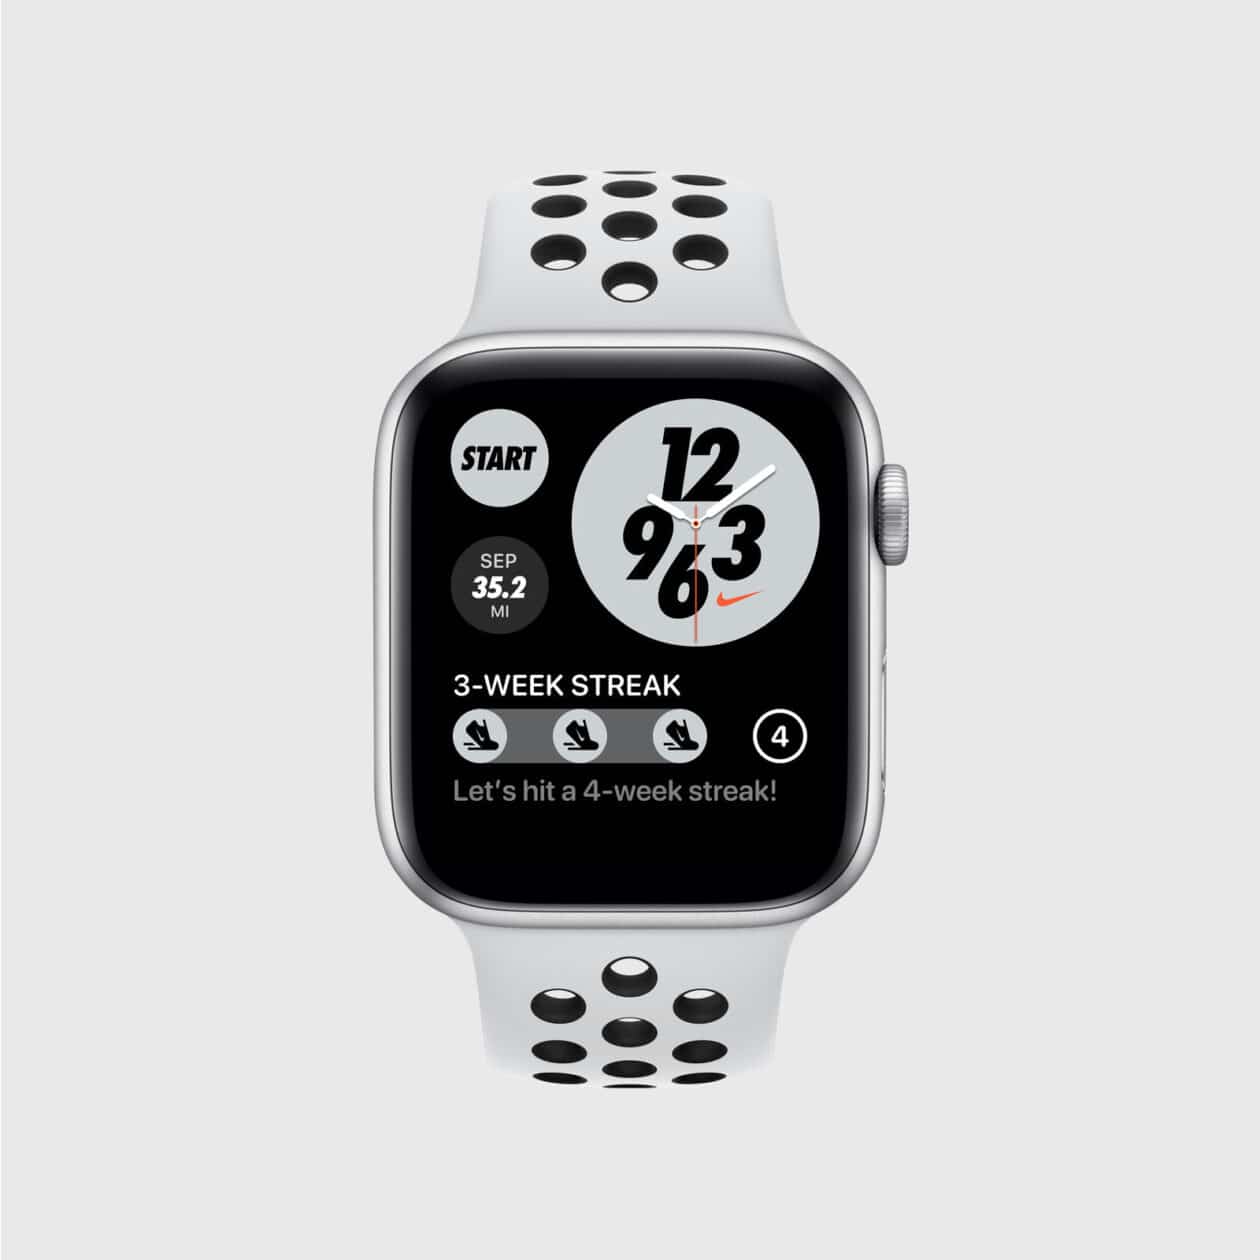 Novos recursos para o Apple Watch Nike